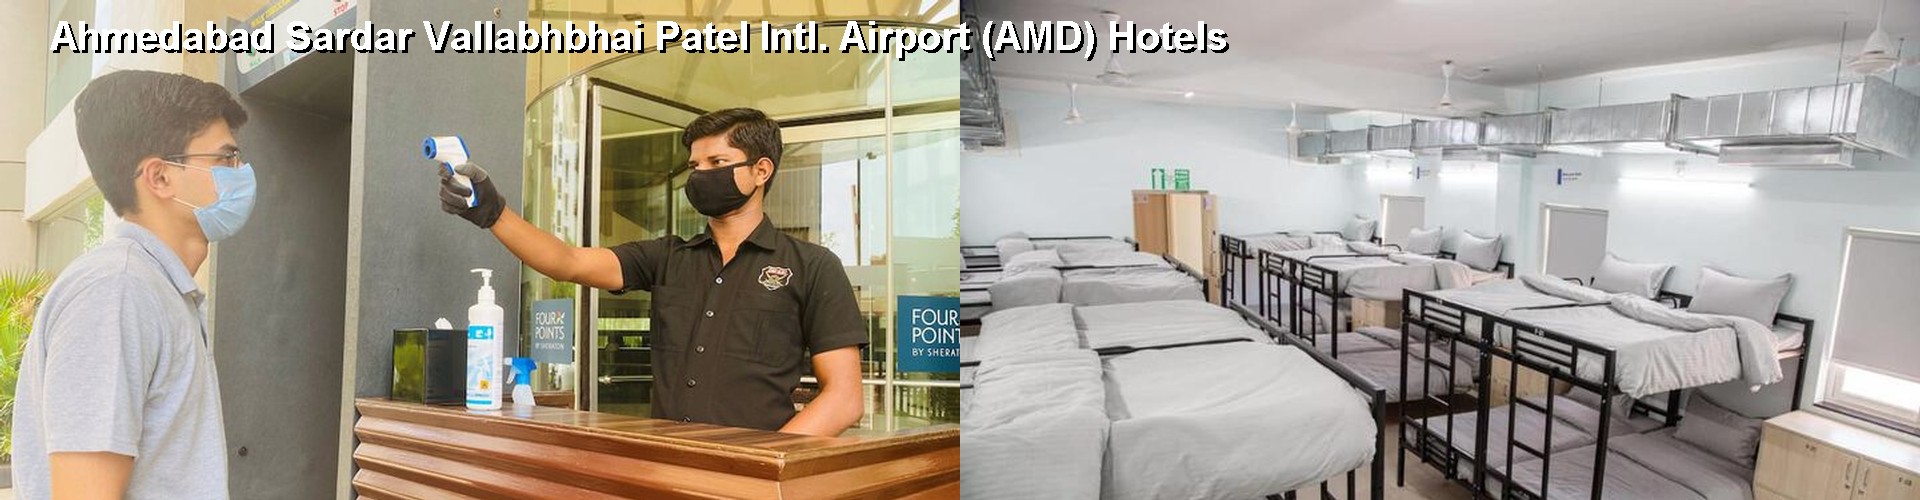 5 Best Hotels near Ahmedabad Sardar Vallabhbhai Patel Intl. Airport (AMD)